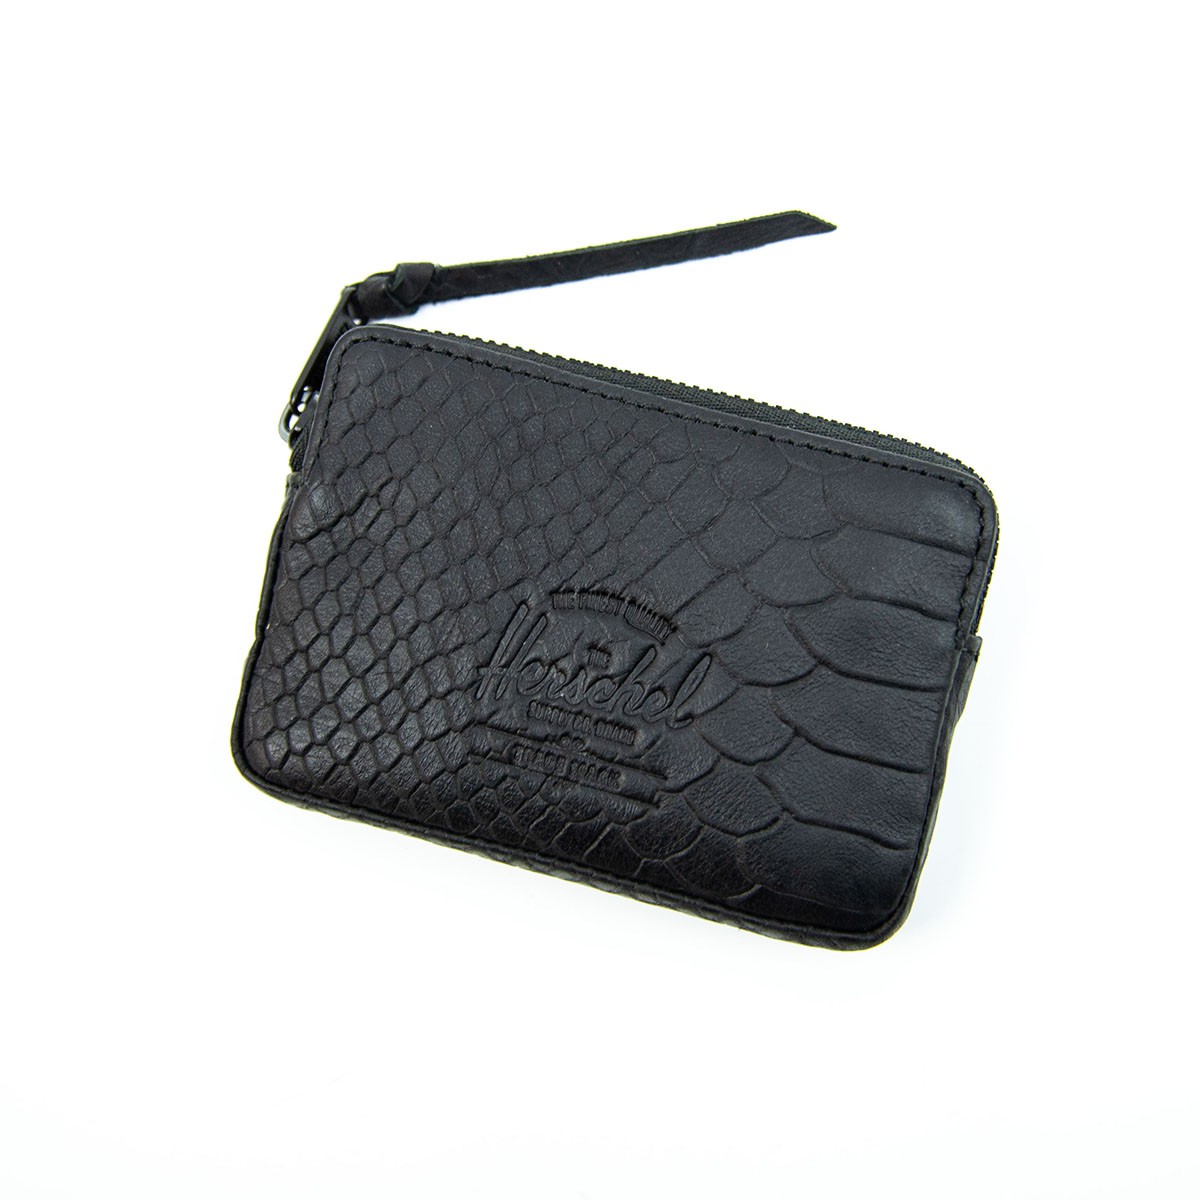 Herschel Supply Co. - Oxford Coin Wallet - Leather Black Snake <旺角店>